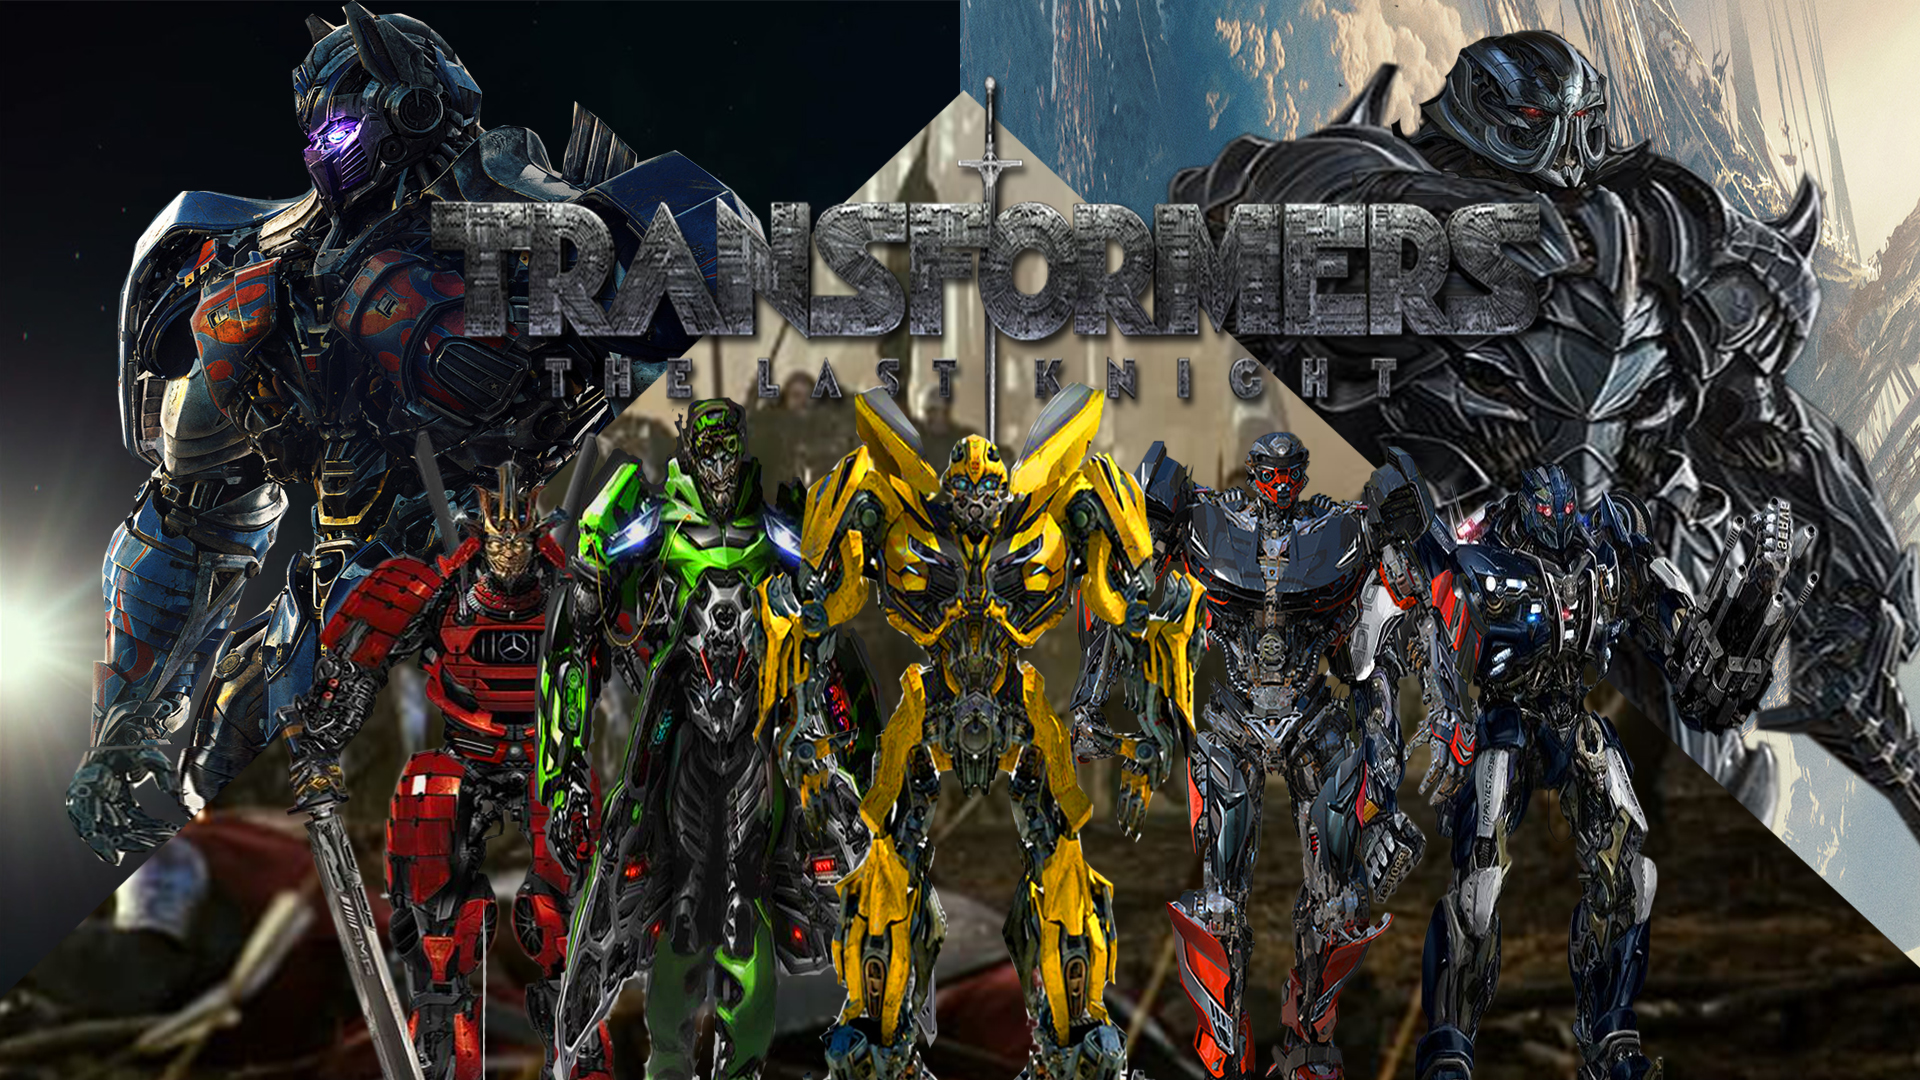 Transformers: The Last Knight Wallpaper by Thekingblader995 on DeviantArt